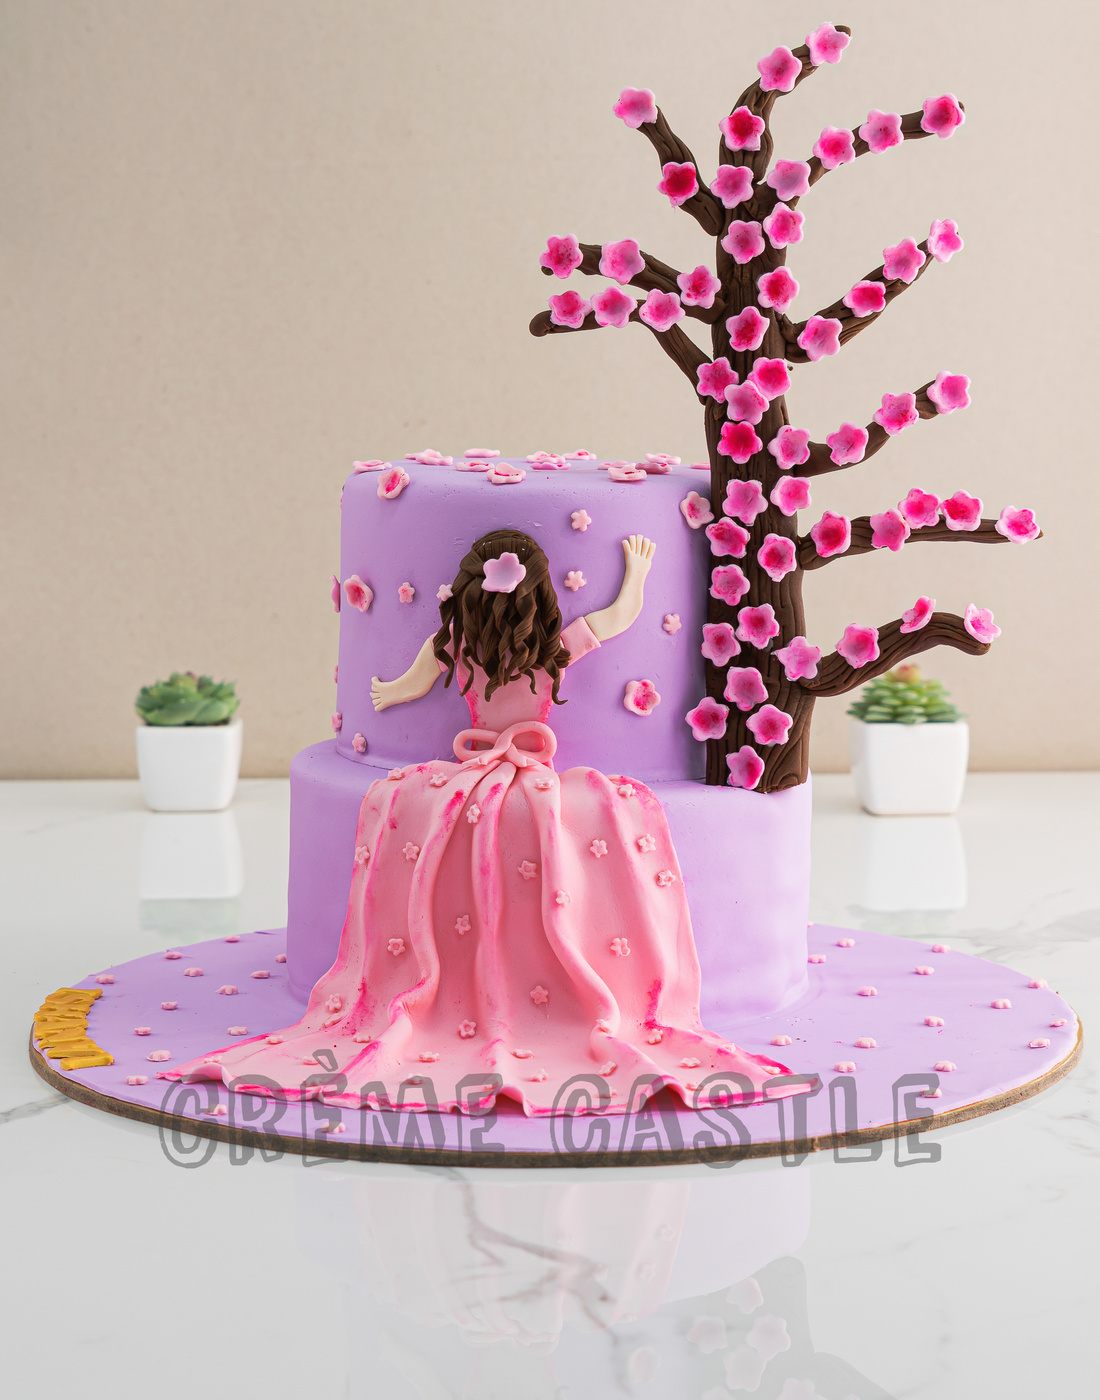 Girl and Tree Cake